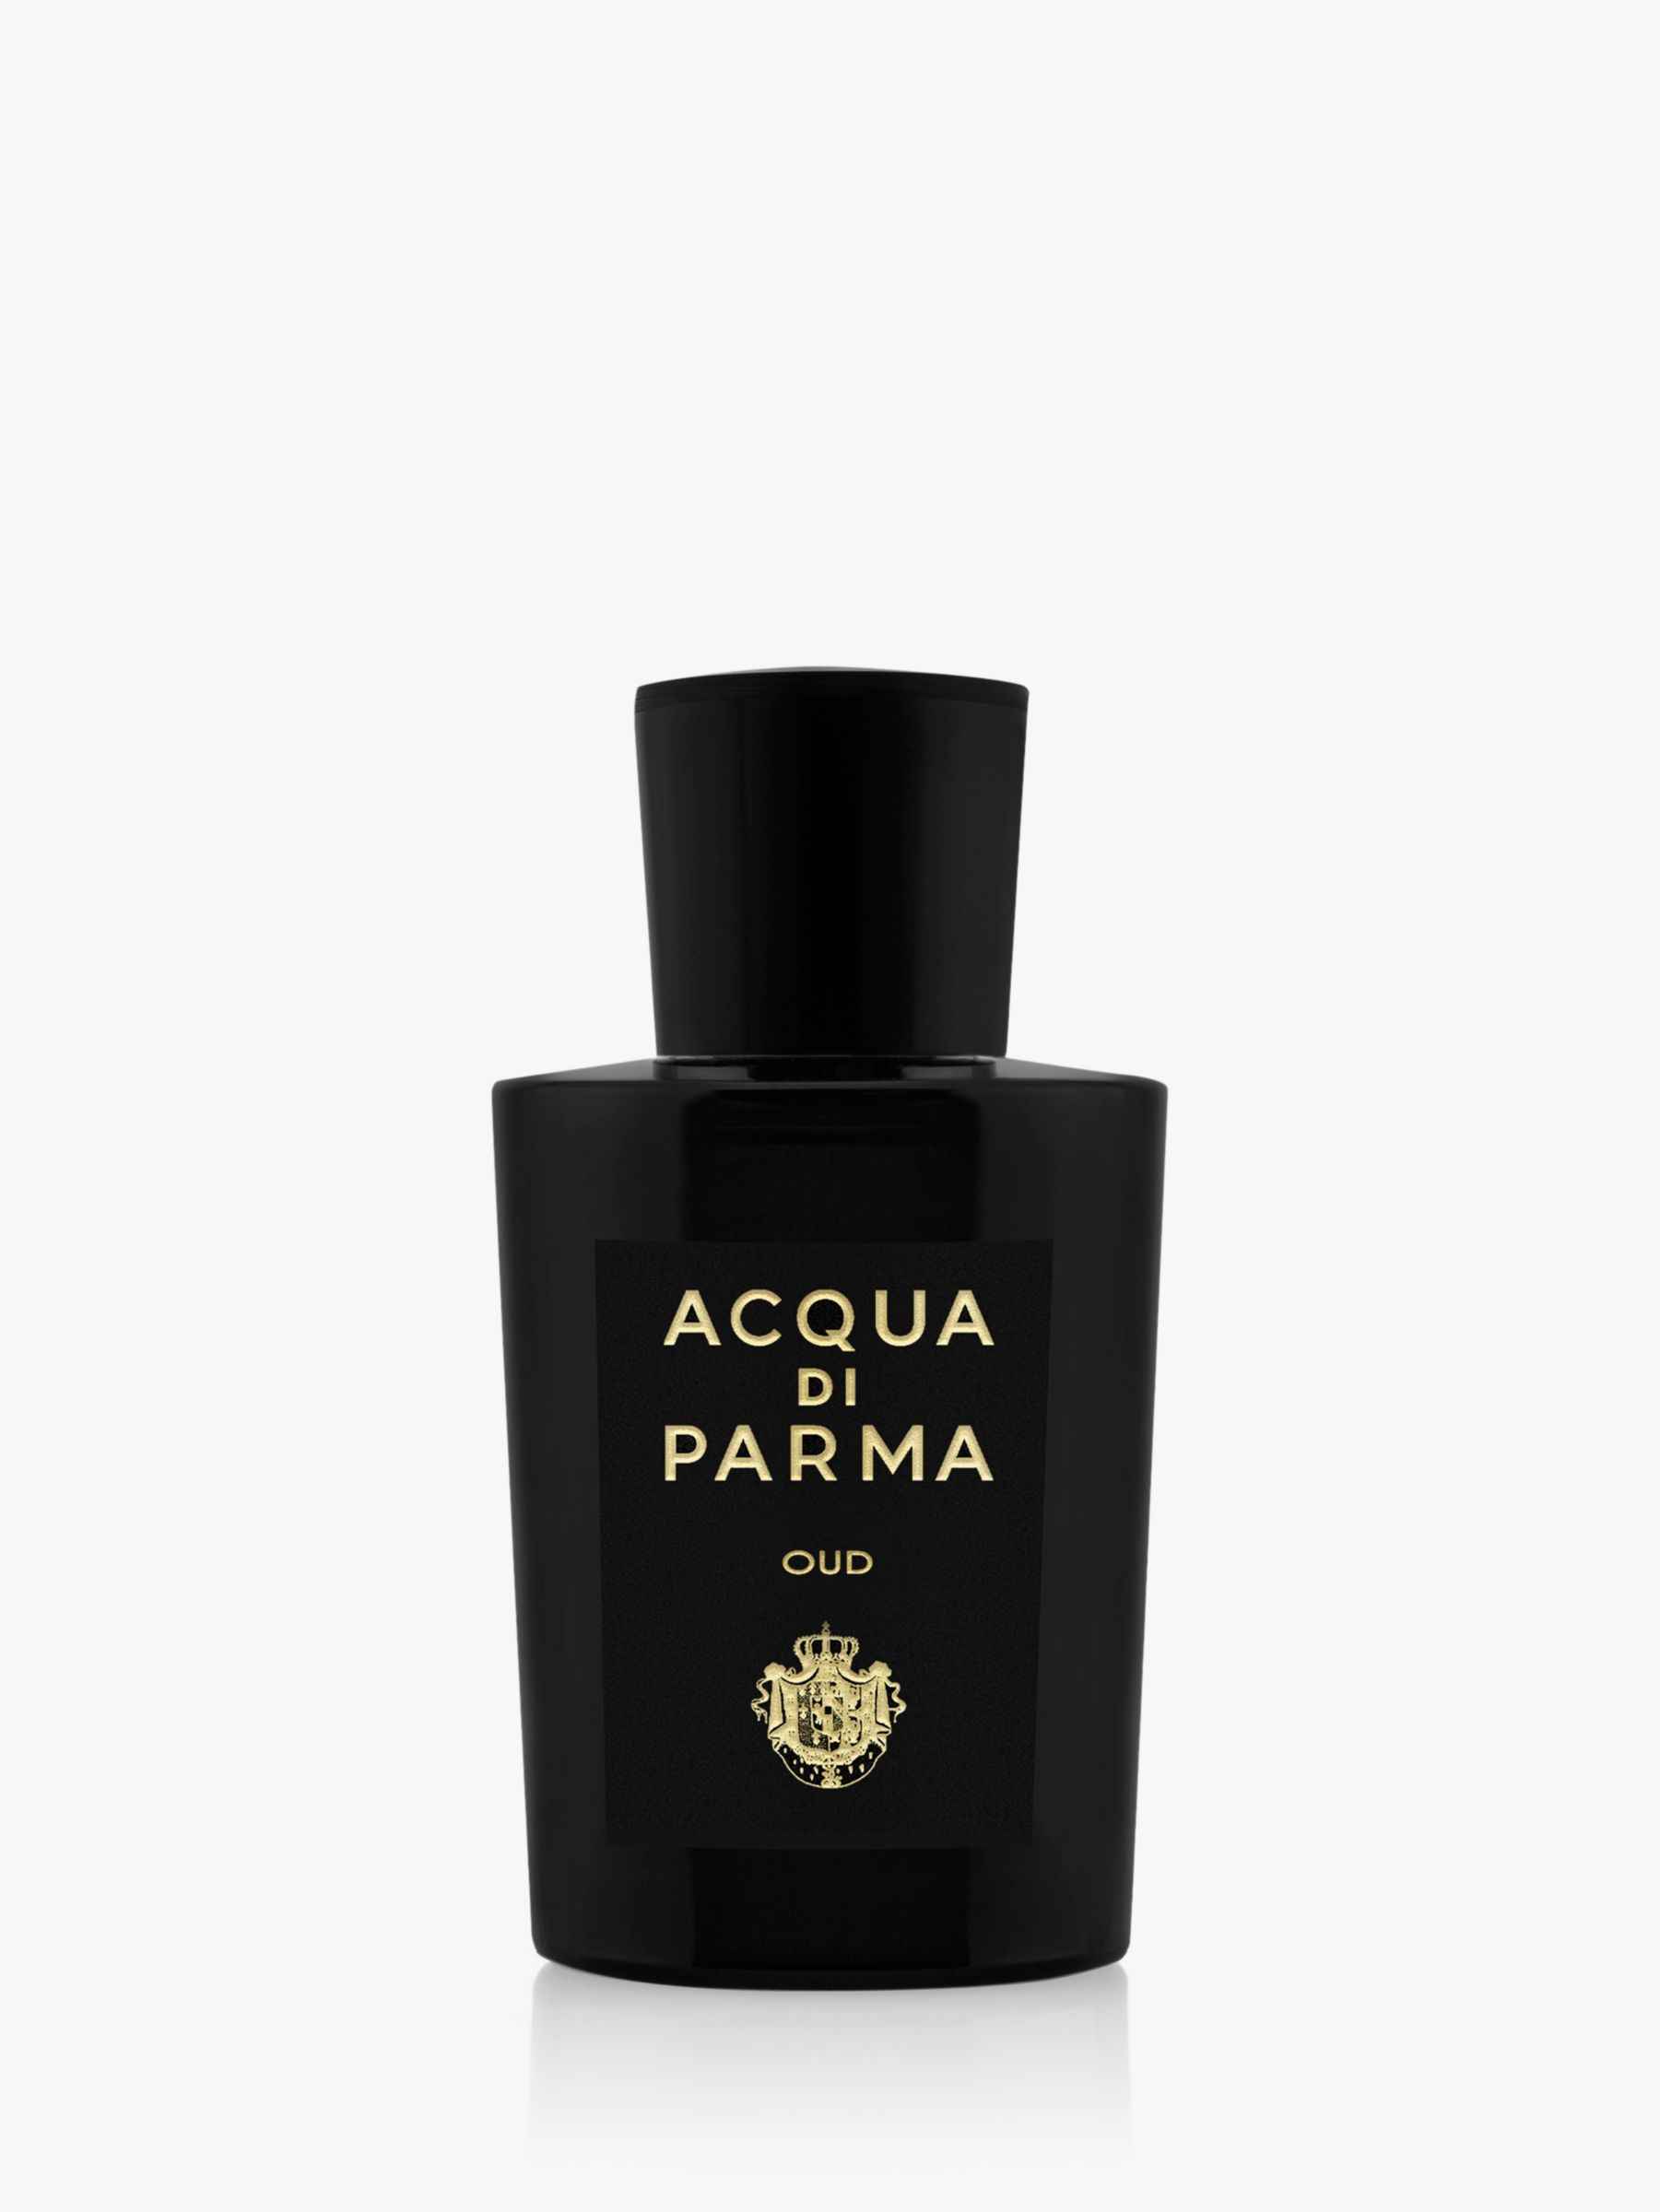 Acqua di Parma Oud Eau de Parfum at 